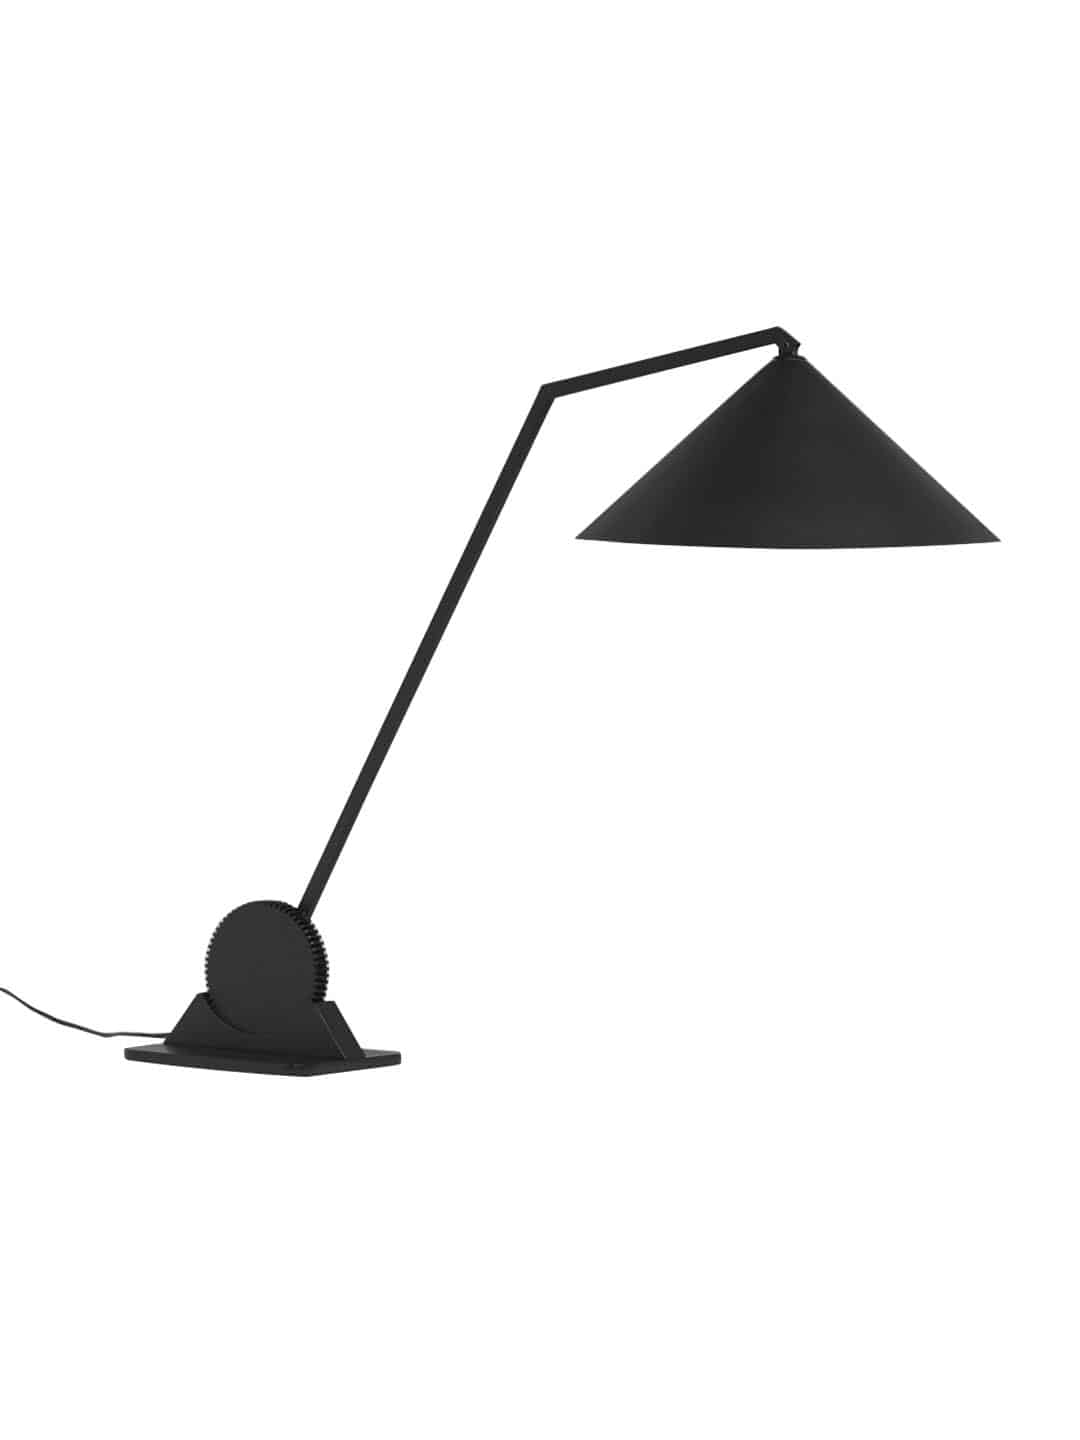 Стильная настольная лампа Northern Gear черного цвета